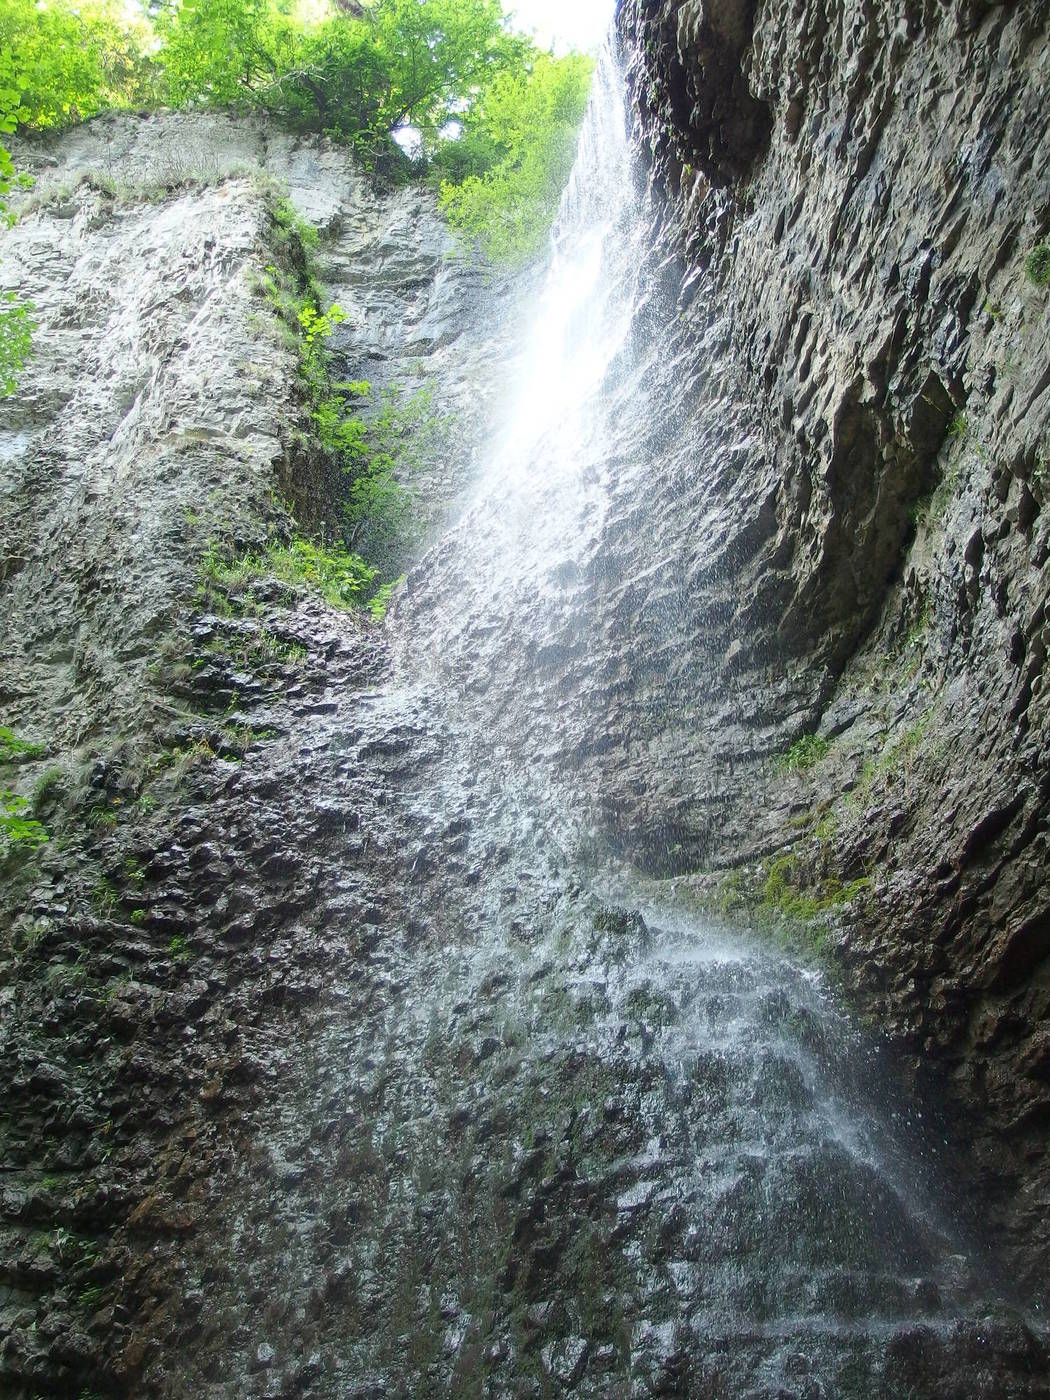 Brankovský vodopád